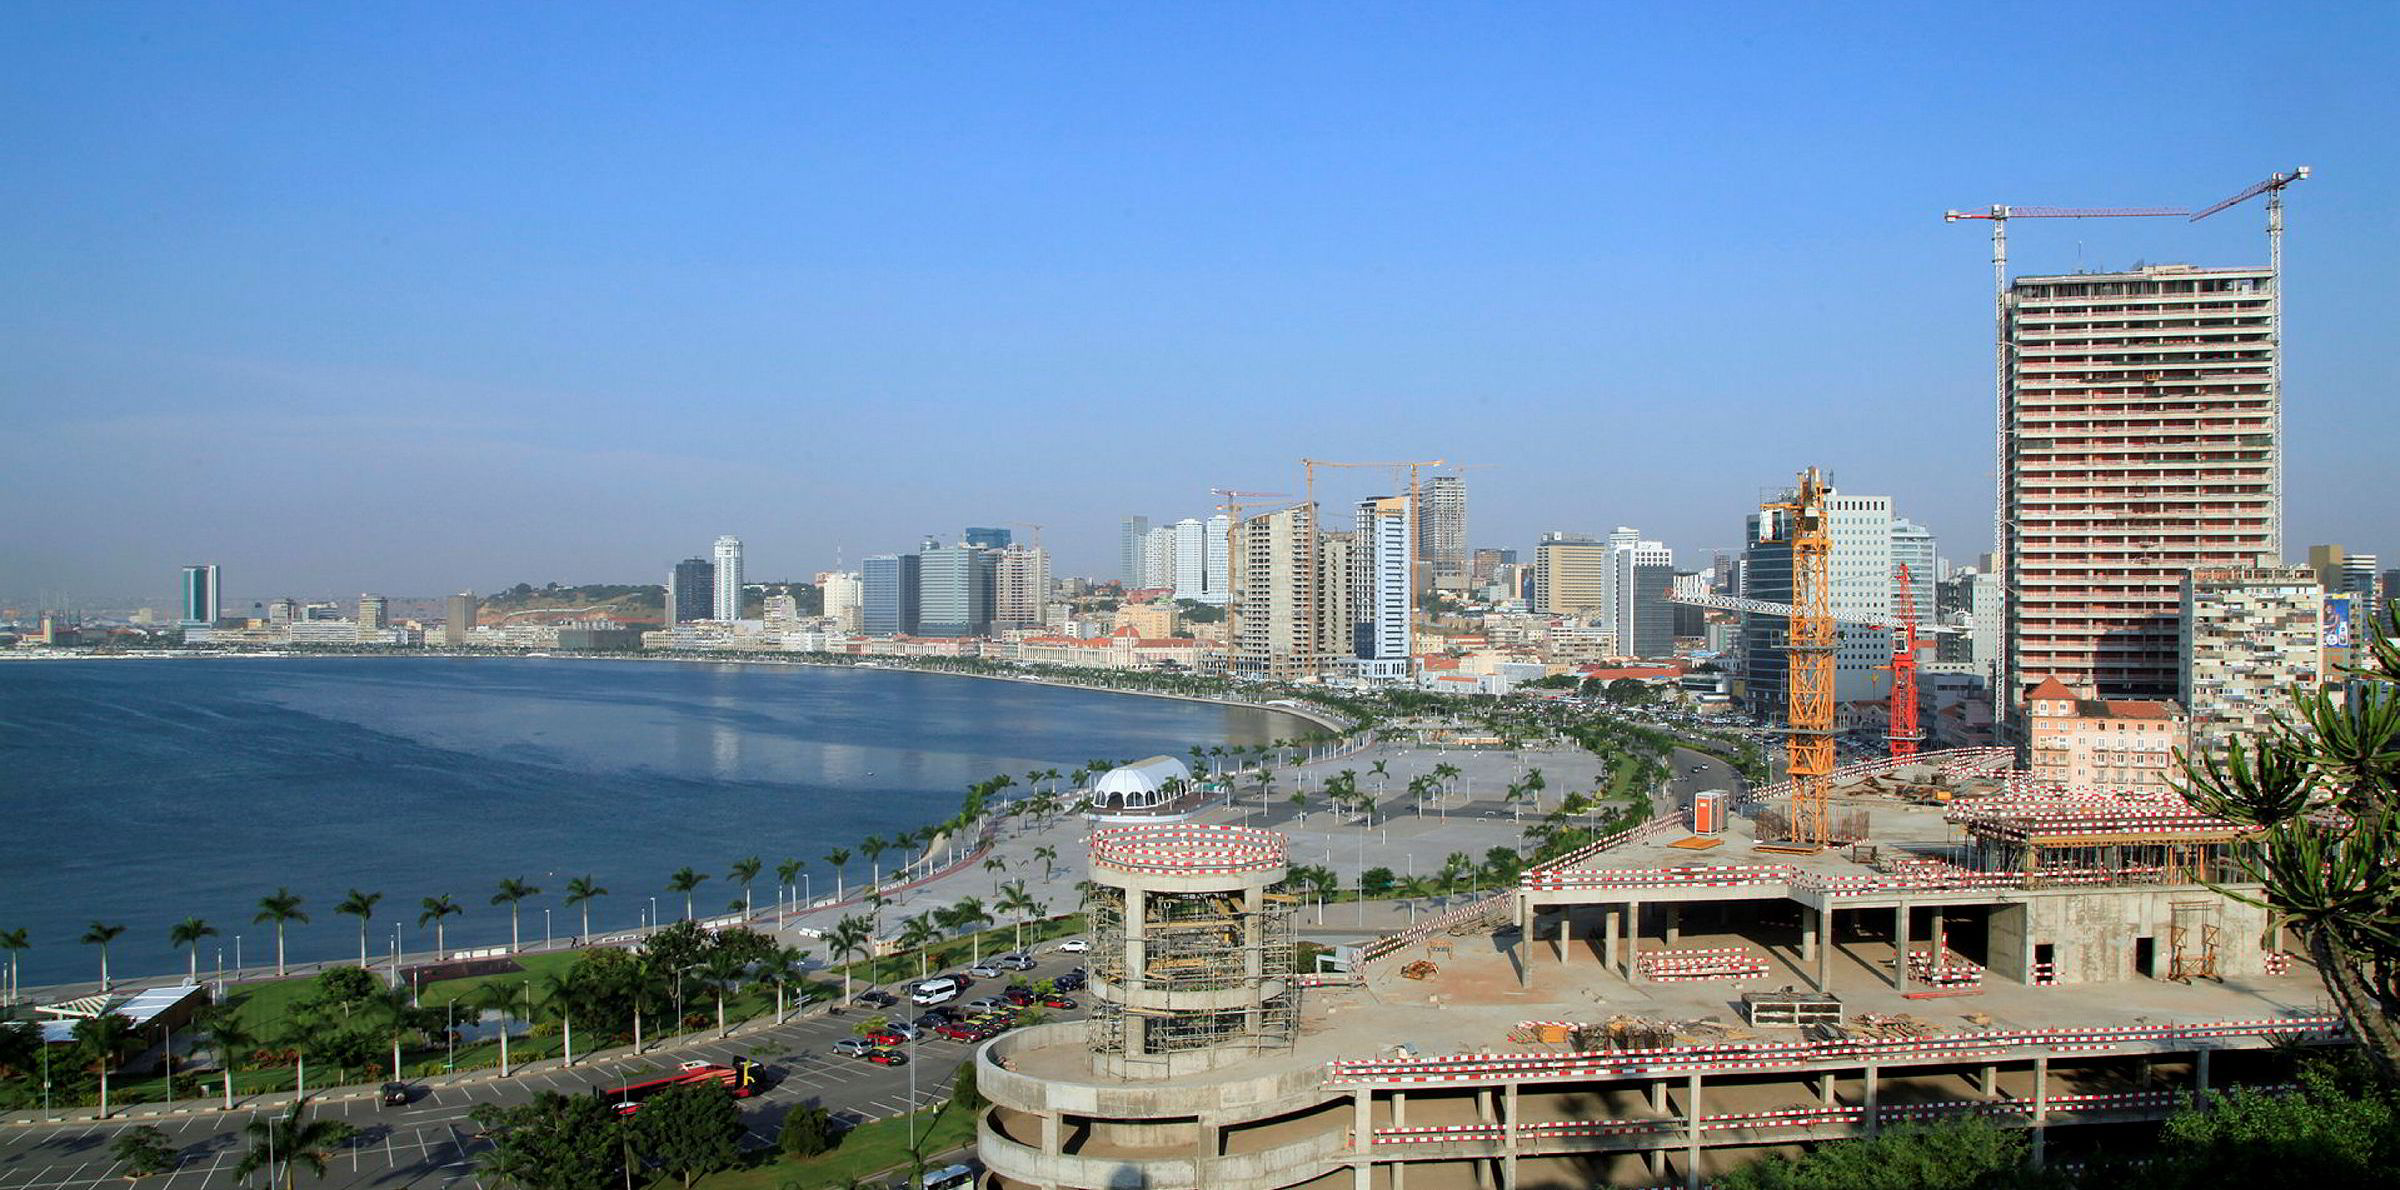 Luanda Angola dating